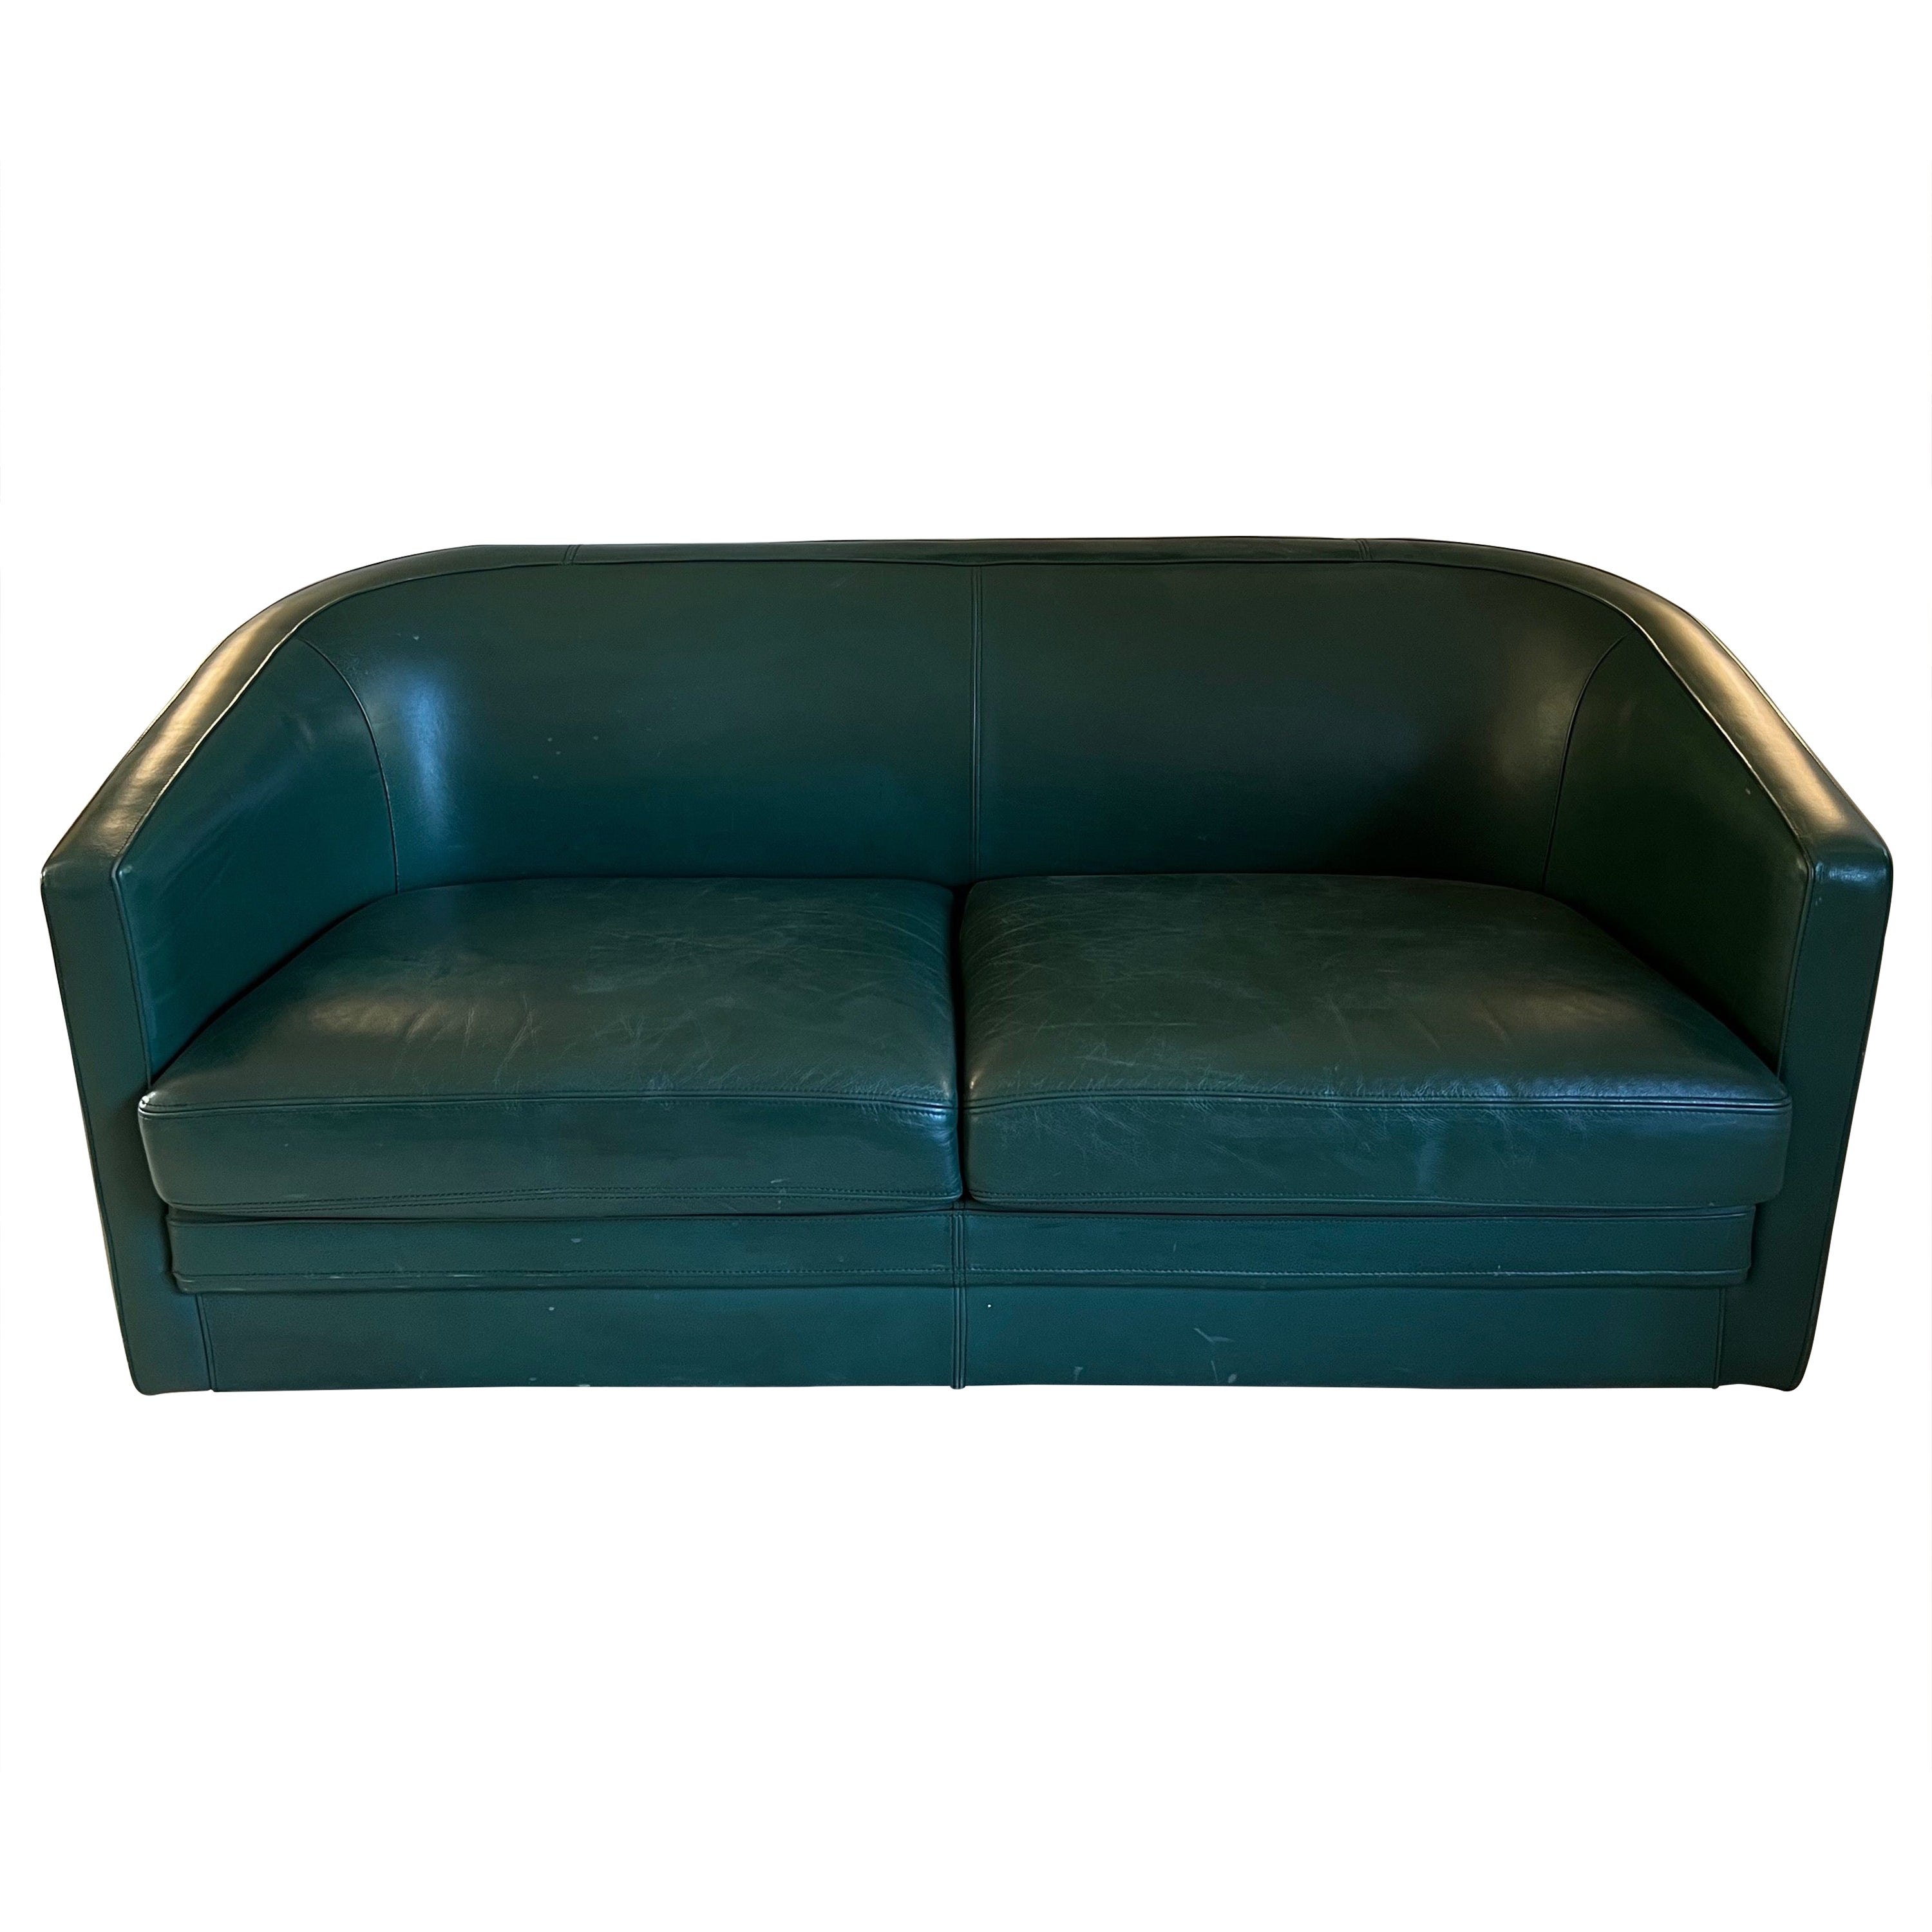 Art Deco Style Green Leather Three Seats Sofa. Circa 1980 For Sale